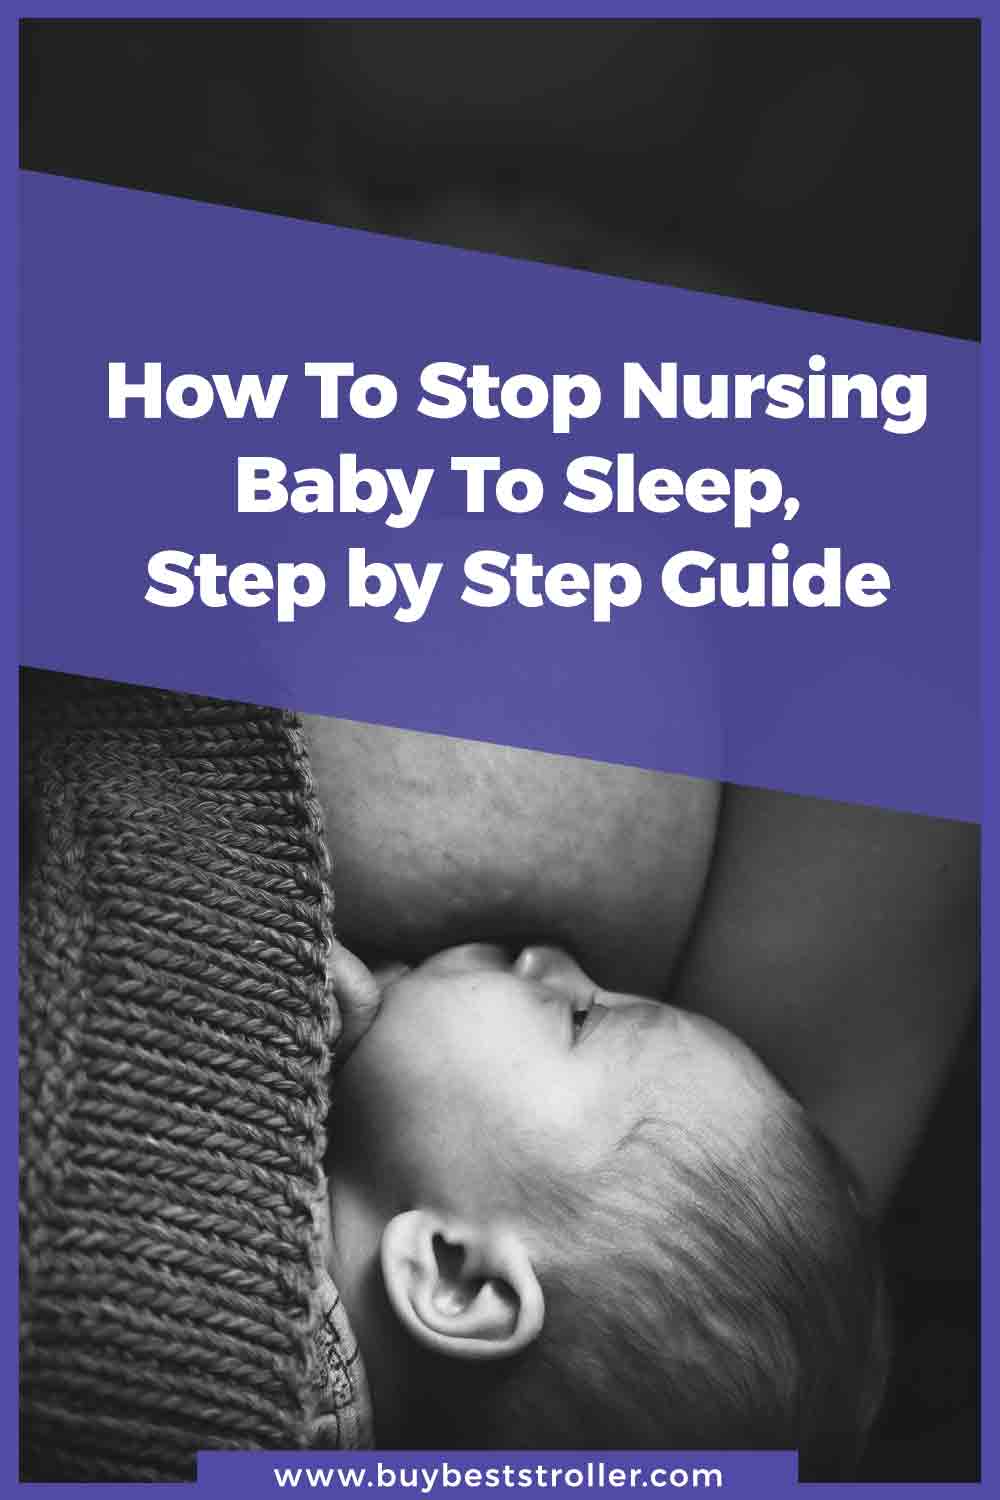 How To Stop Nursing Baby To Sleep